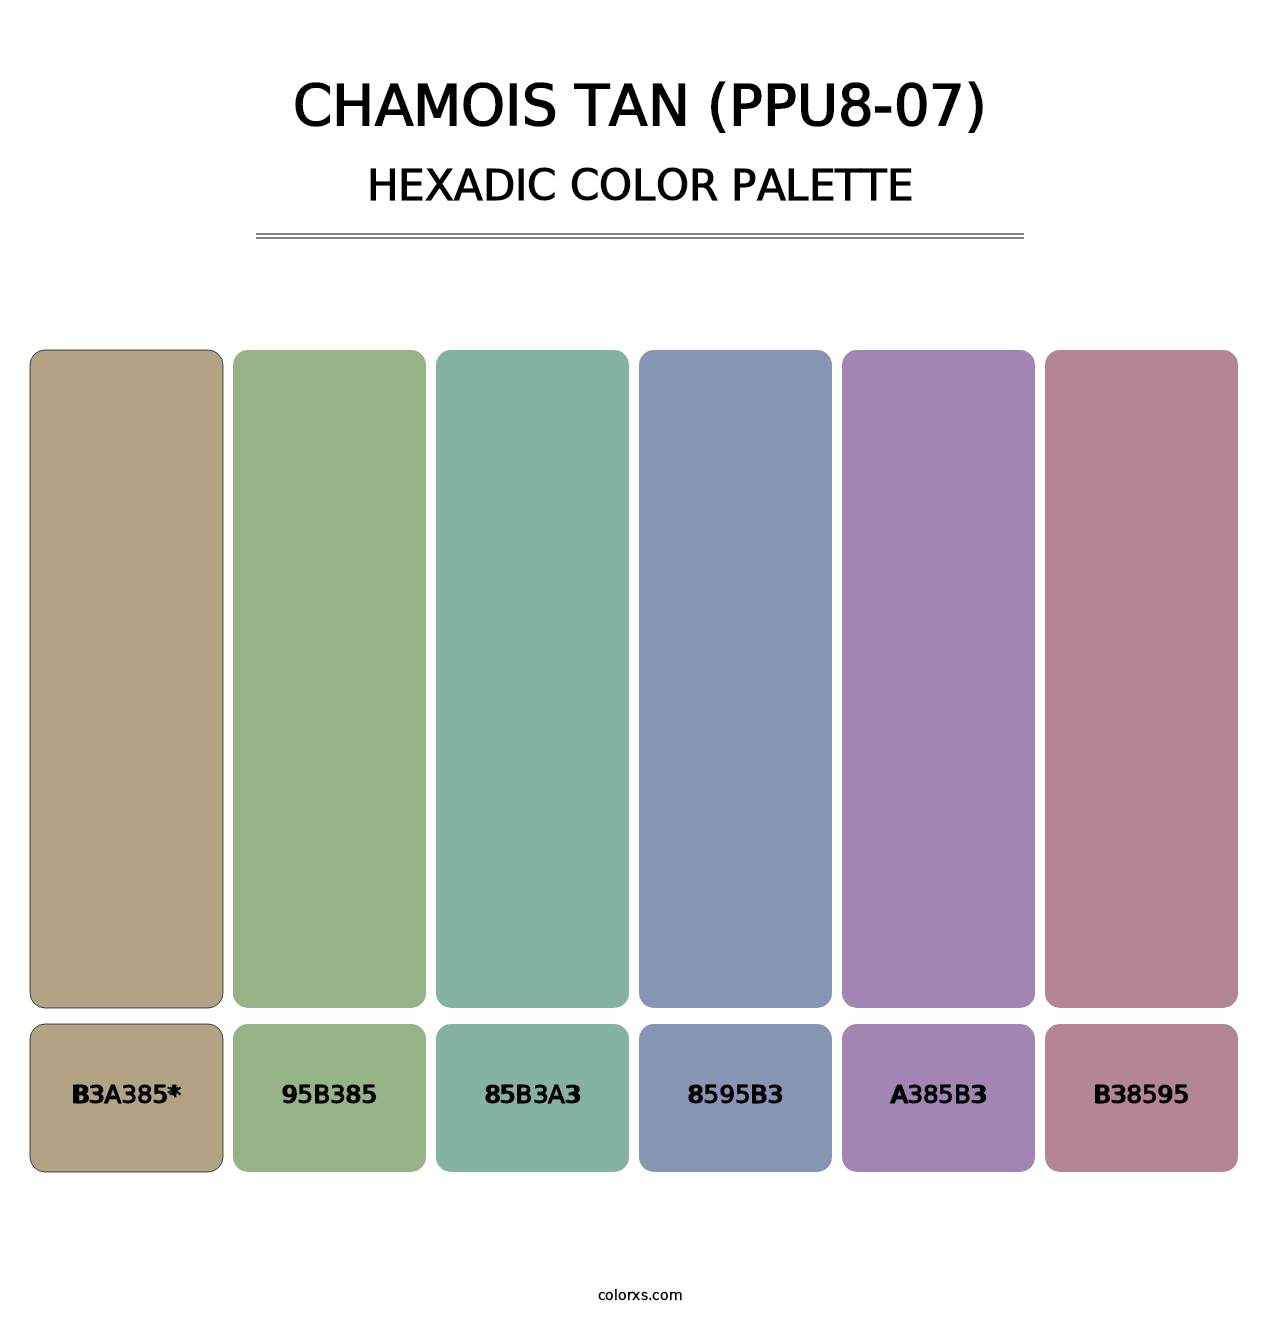 Chamois Tan (PPU8-07) - Hexadic Color Palette